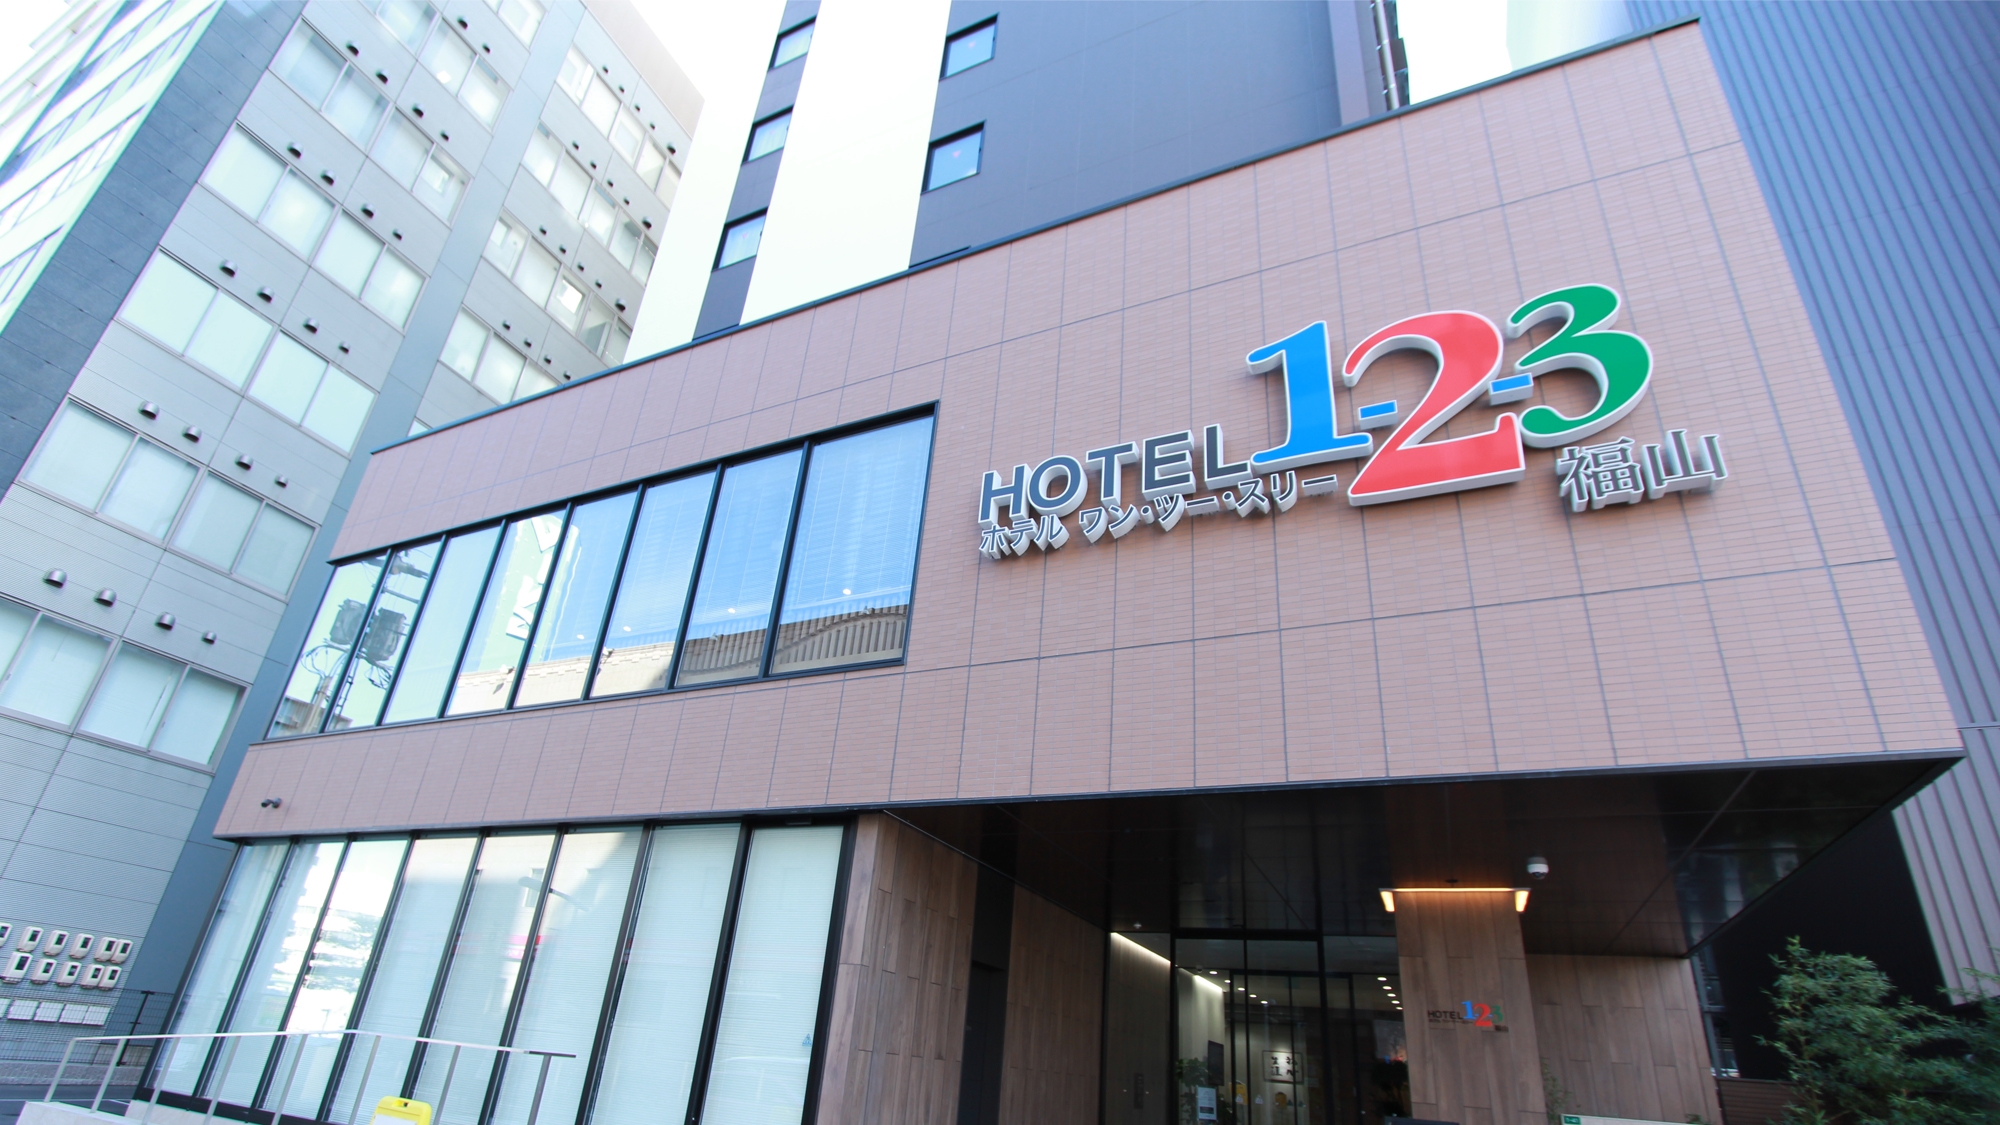 ホテル１−２−３福山